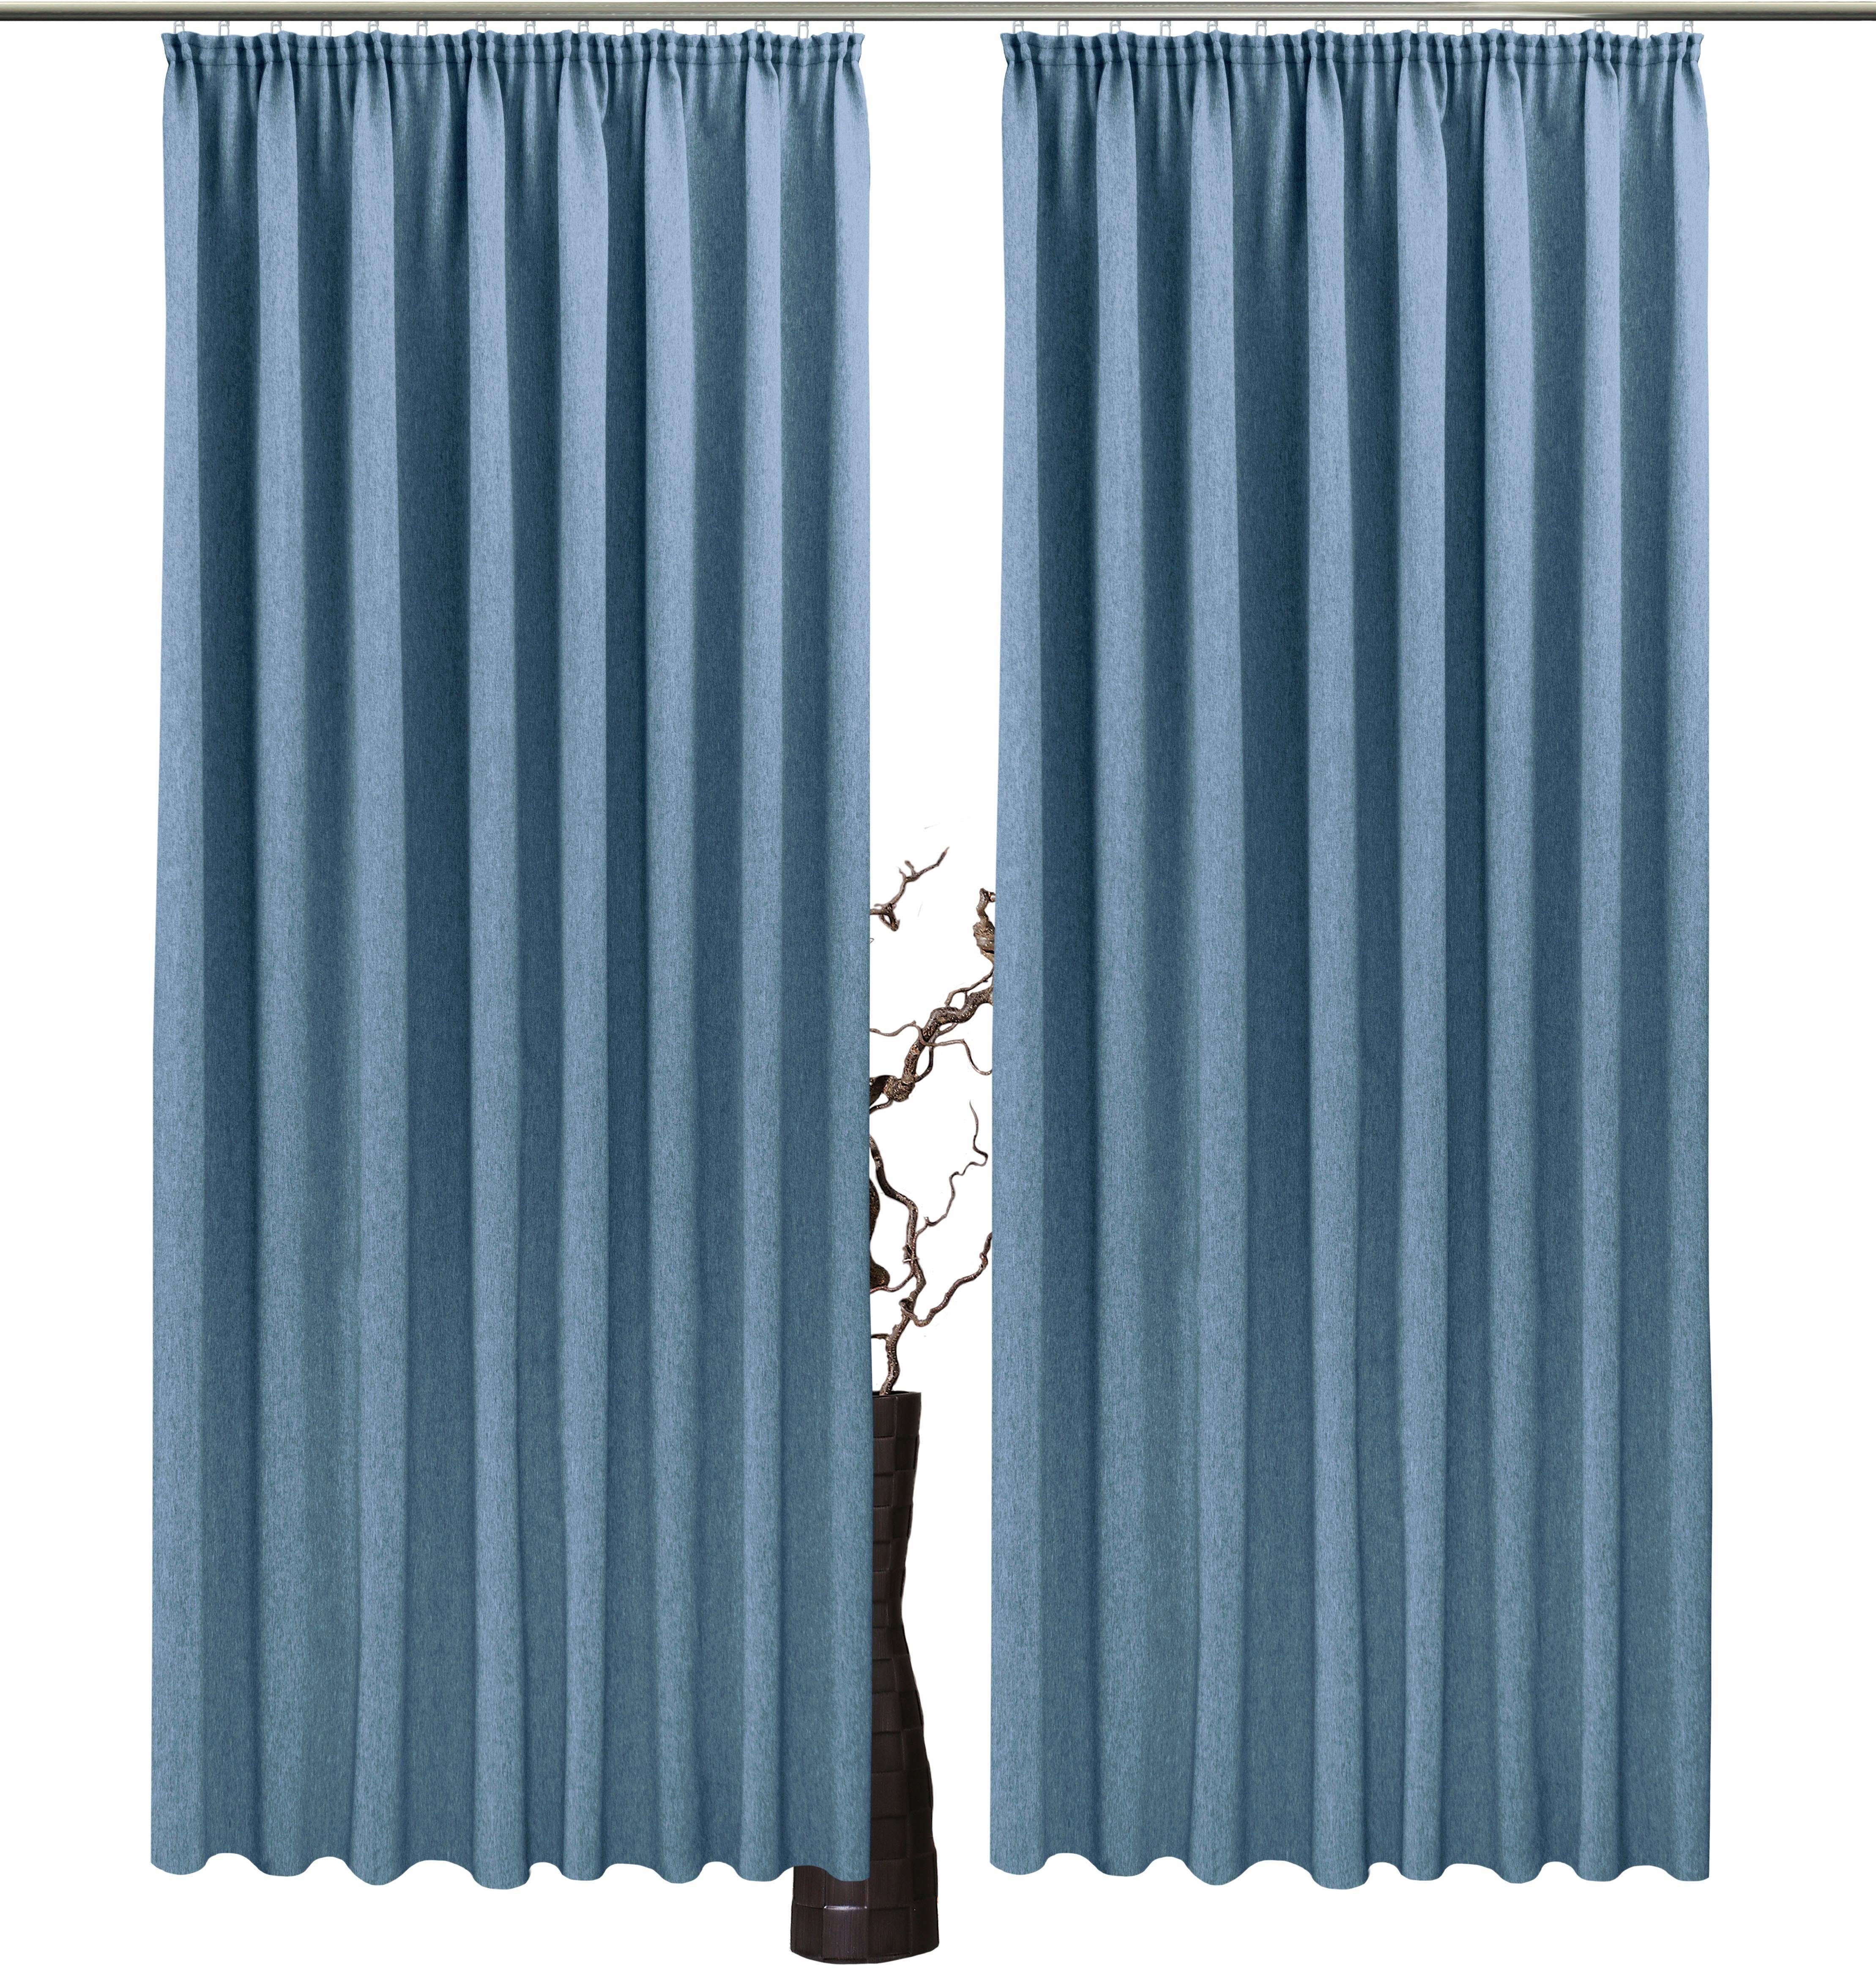 VHG, St), Una, blickdicht Kräuselband blau (2 Vorhang